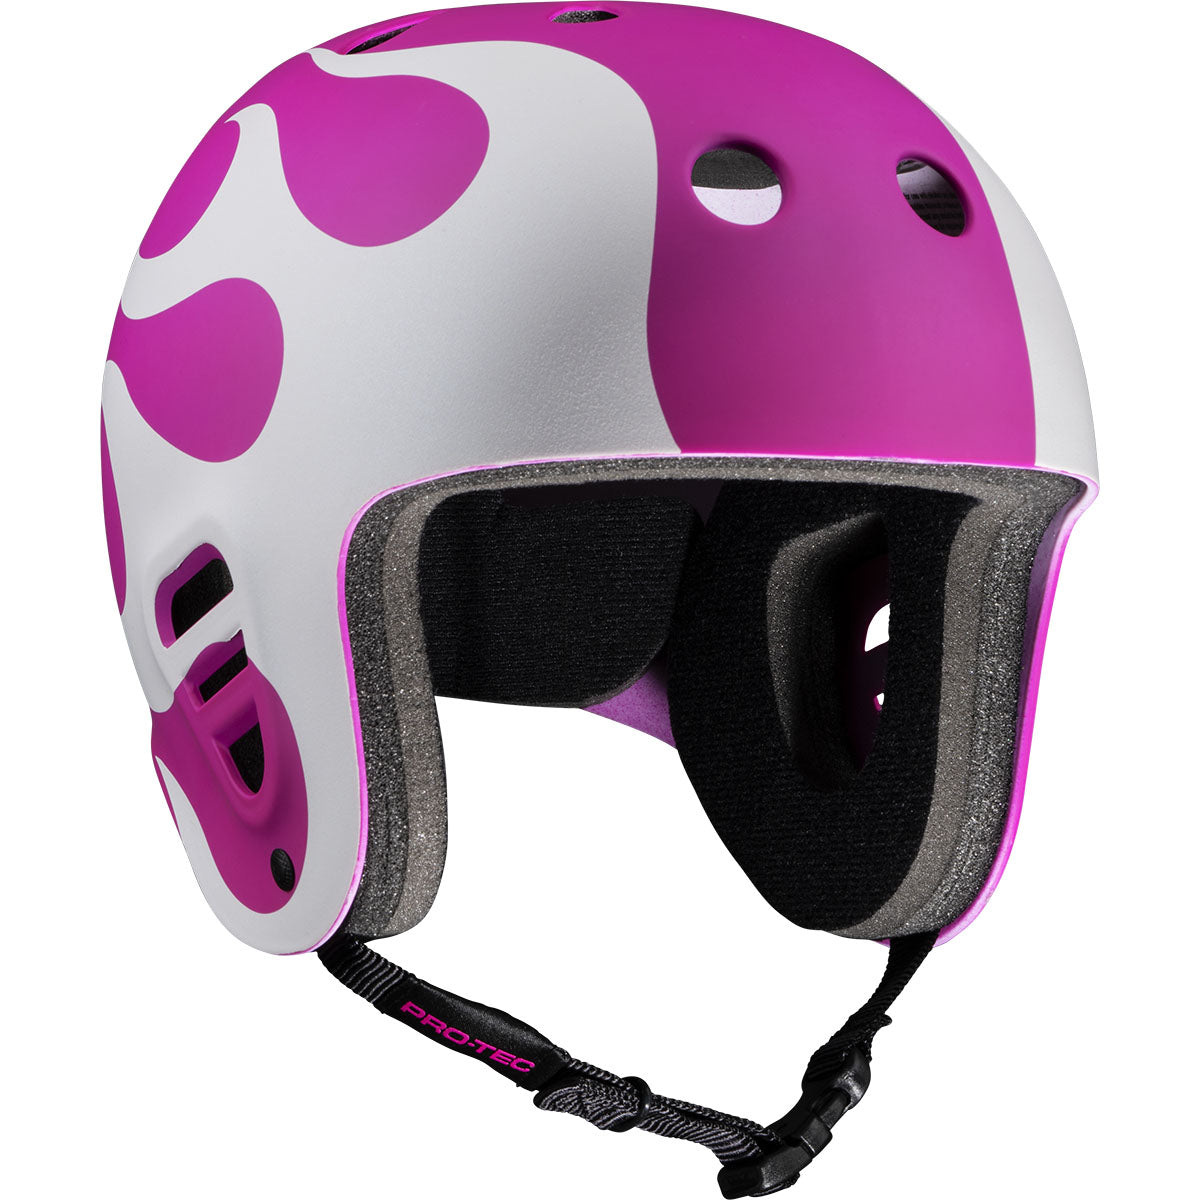 Pro-Tec Full Cut Skate Gonz Flame Helmet - Pink image 3